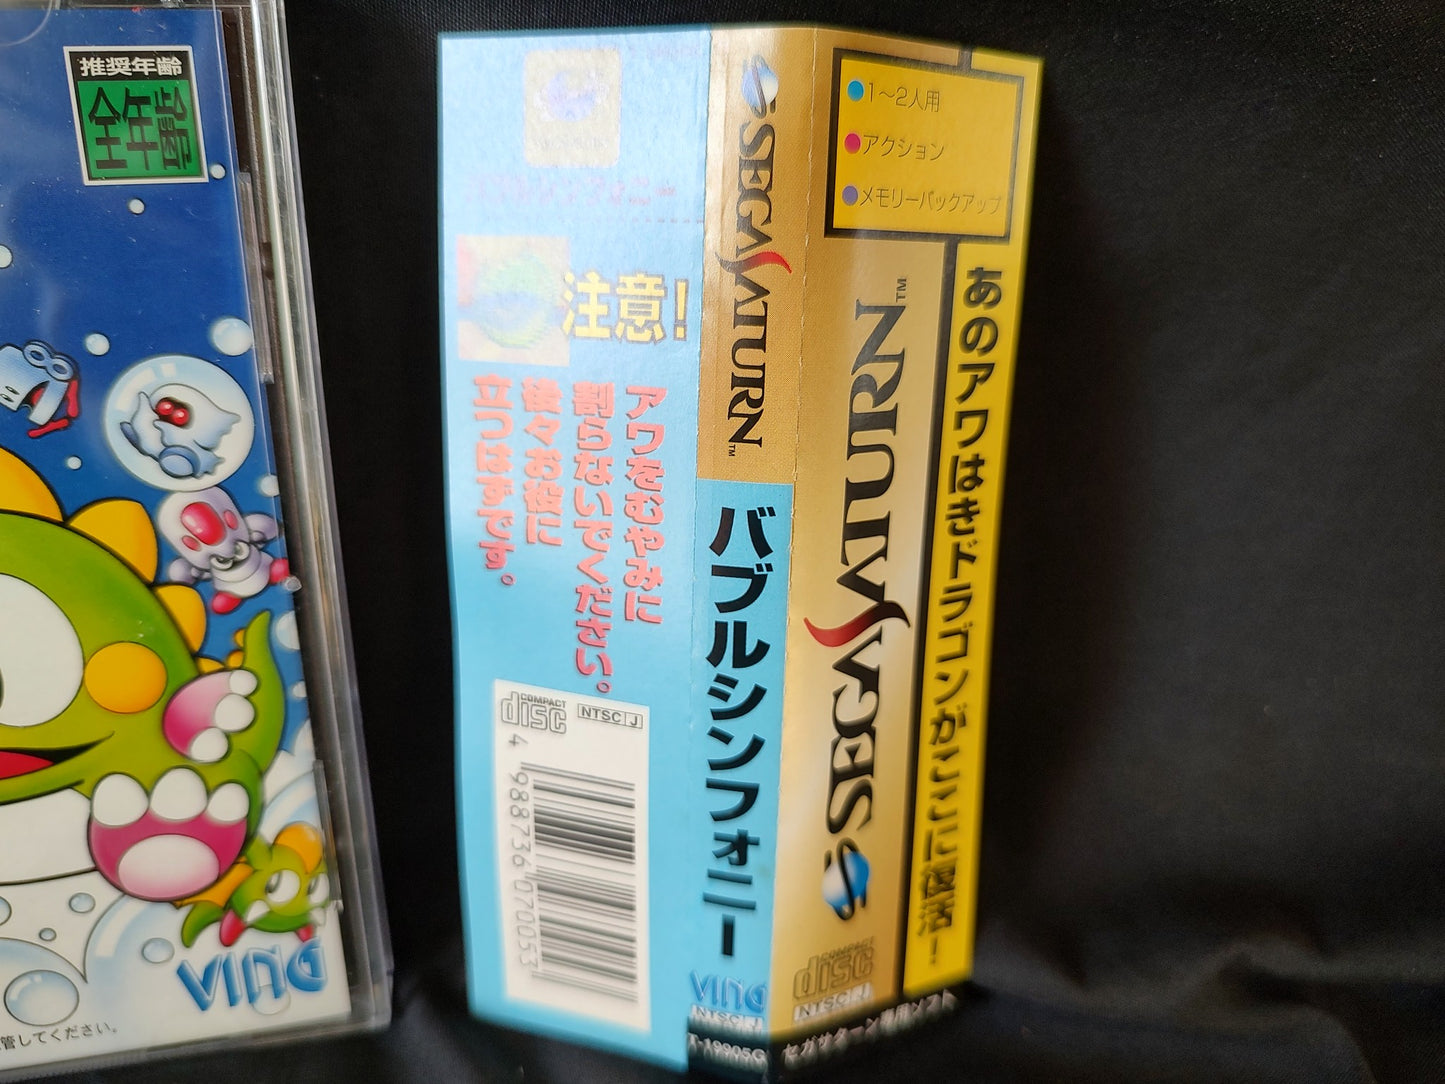 Bubble Symphony SEGA Saturn,Game Disk,Manual,Spine card,Boxed set tested-g0212-